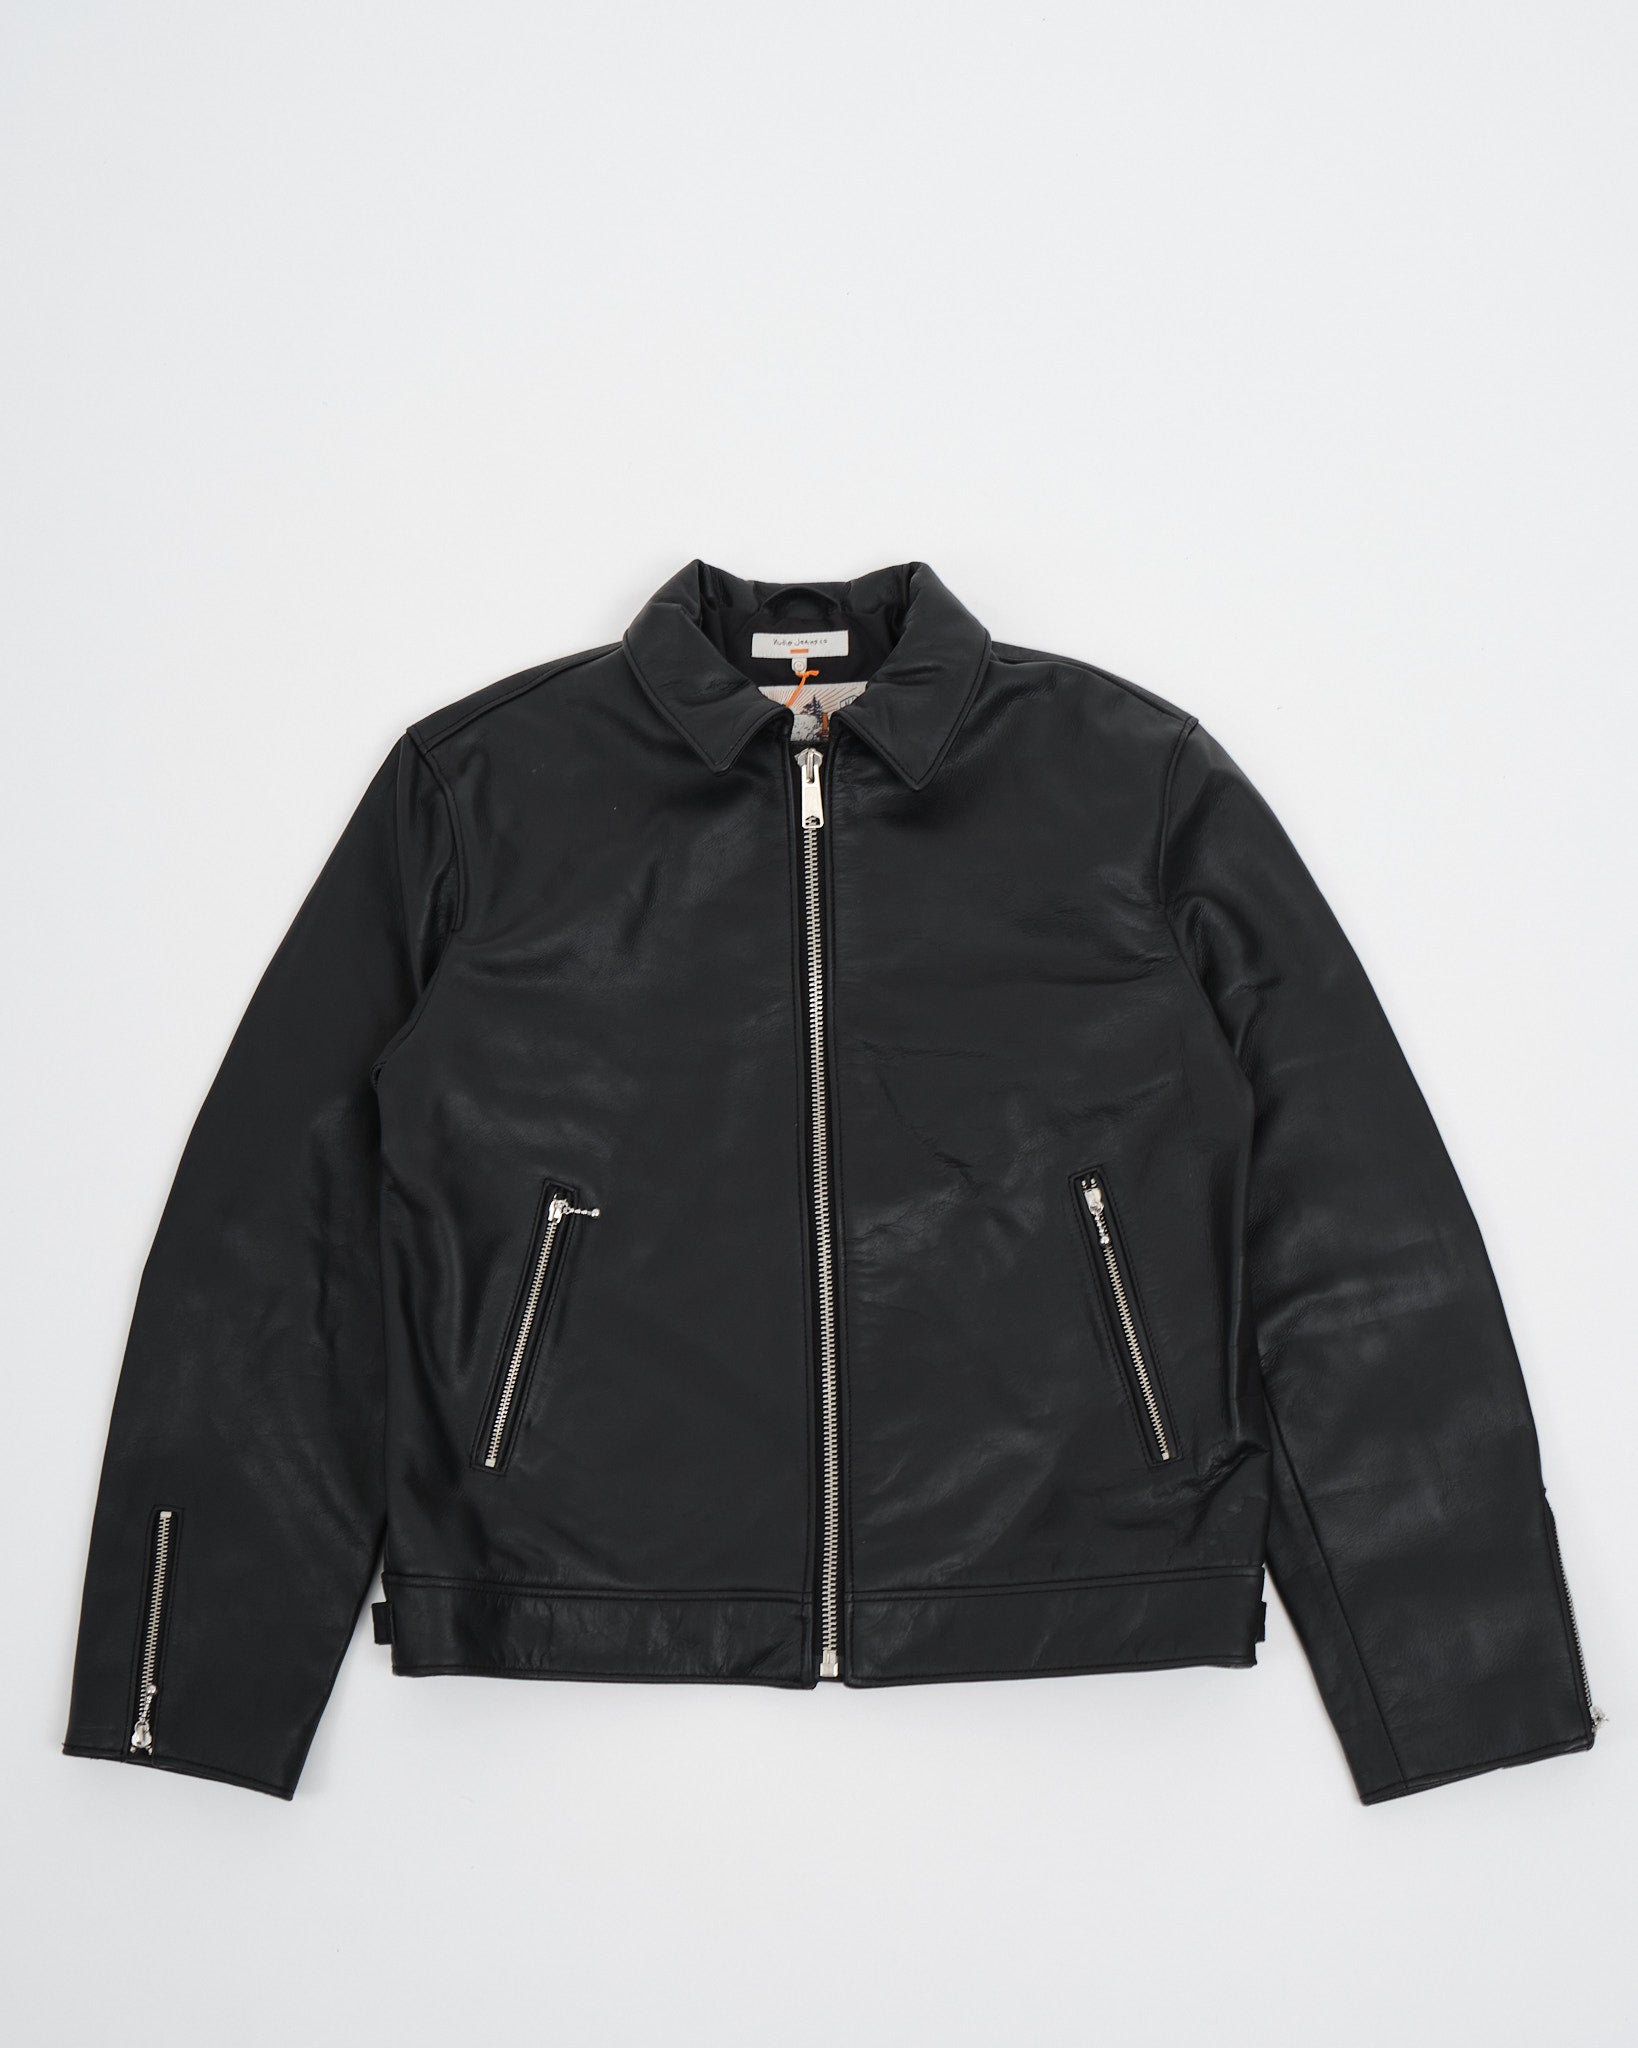 Eddy Rider Leather Jacket Black - Meadow